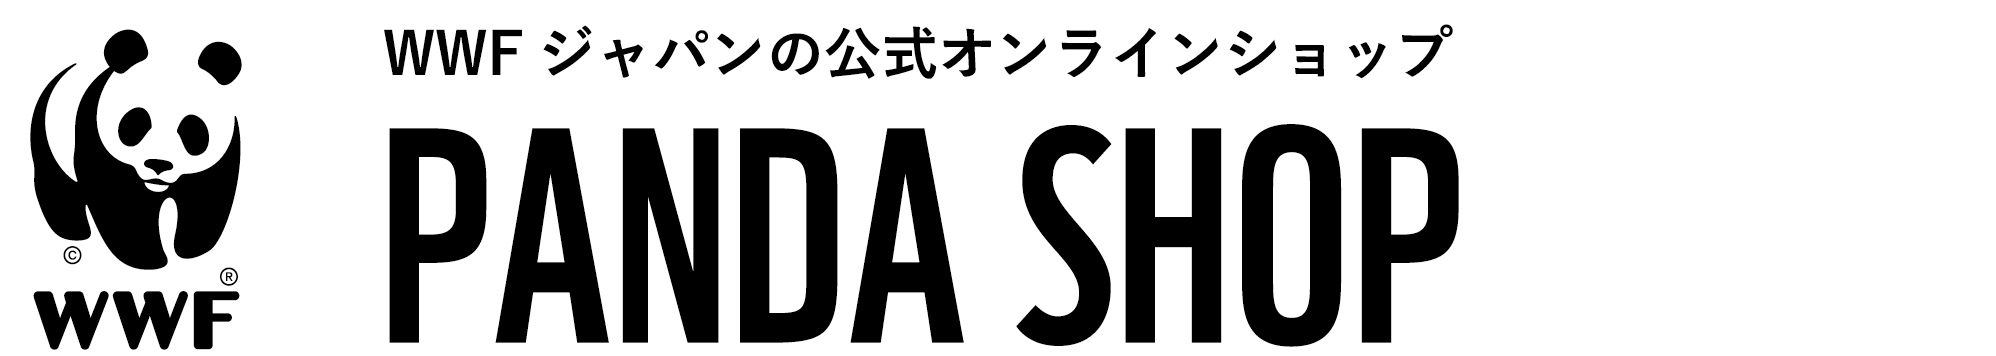 WWFジャパン PANDA SHOP